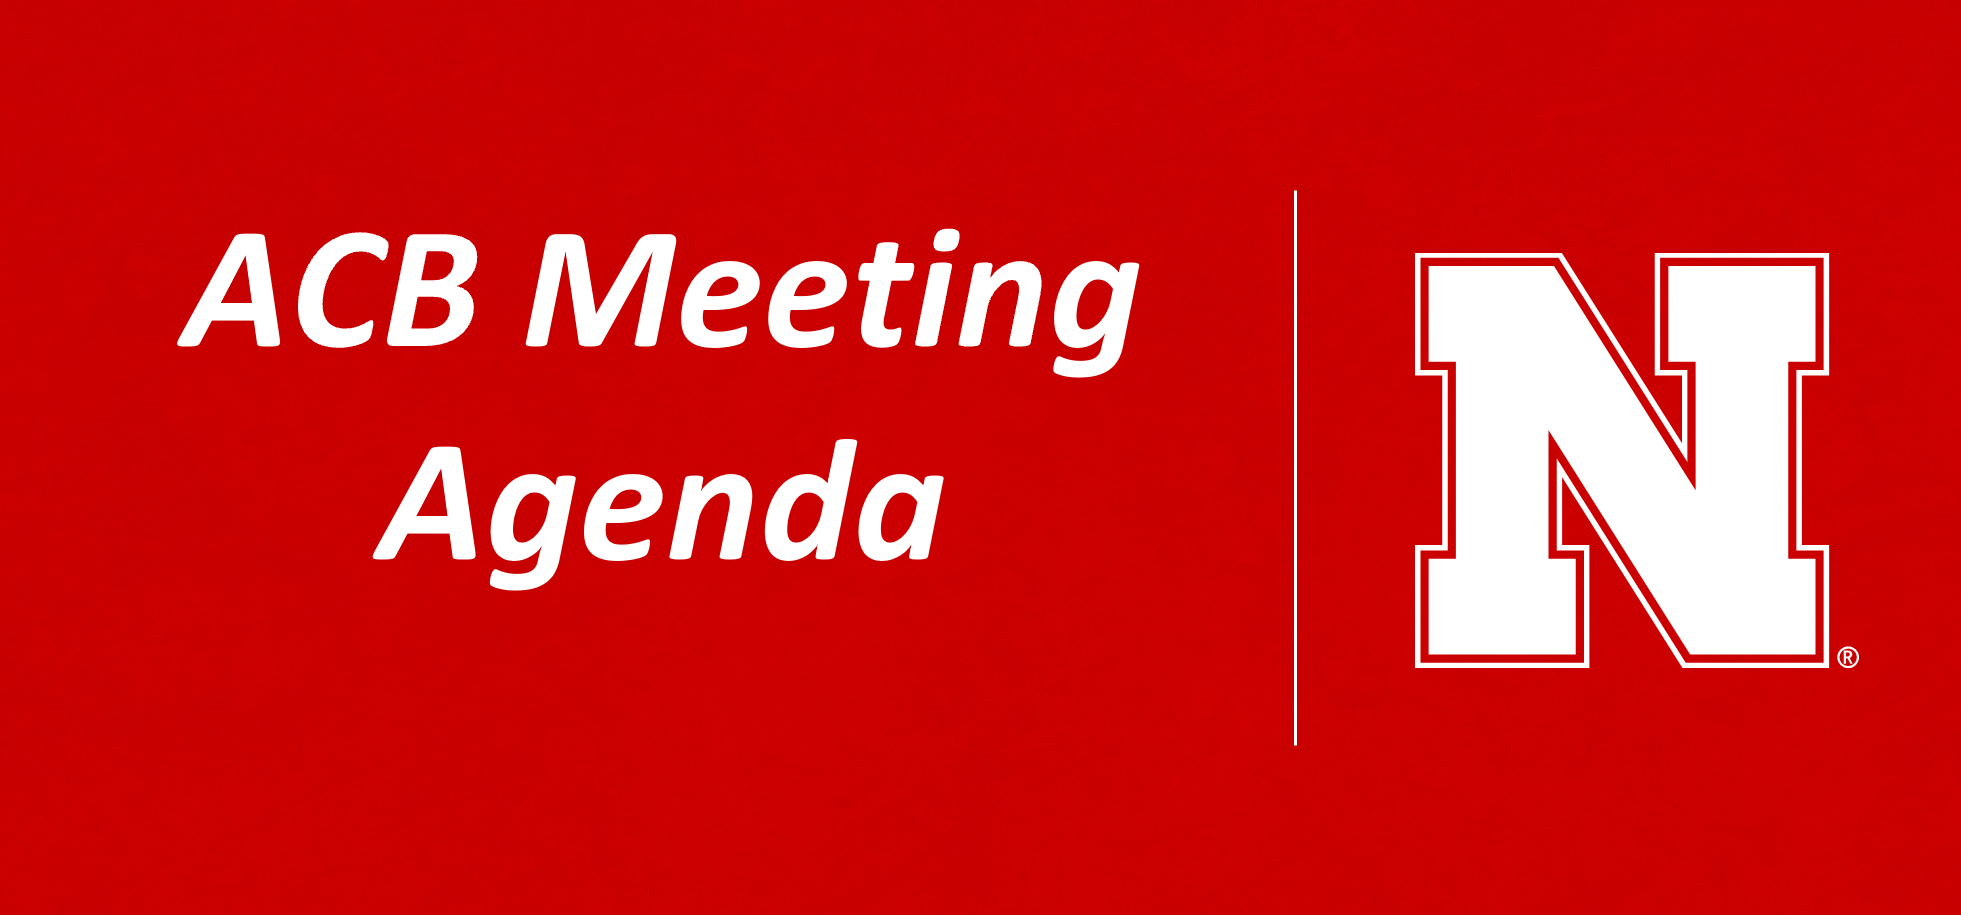 ACB Meeting Agenda